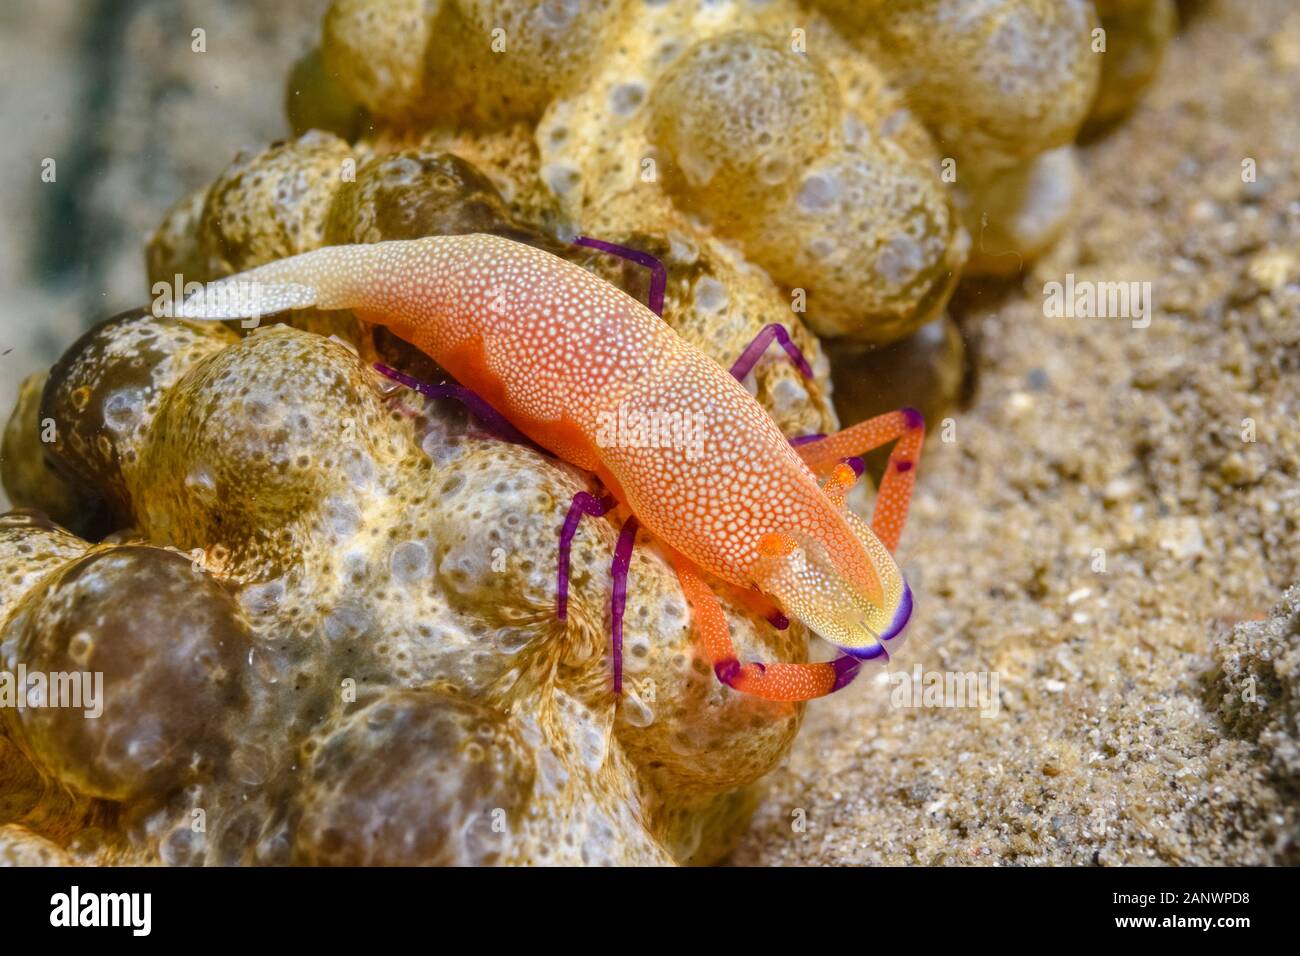 emperor shrimp, Periclimenes imperator, on sea cucumber, Opheodesoma sp., Madang, Papua New Guinea, Pacific Ocean Stock Photo